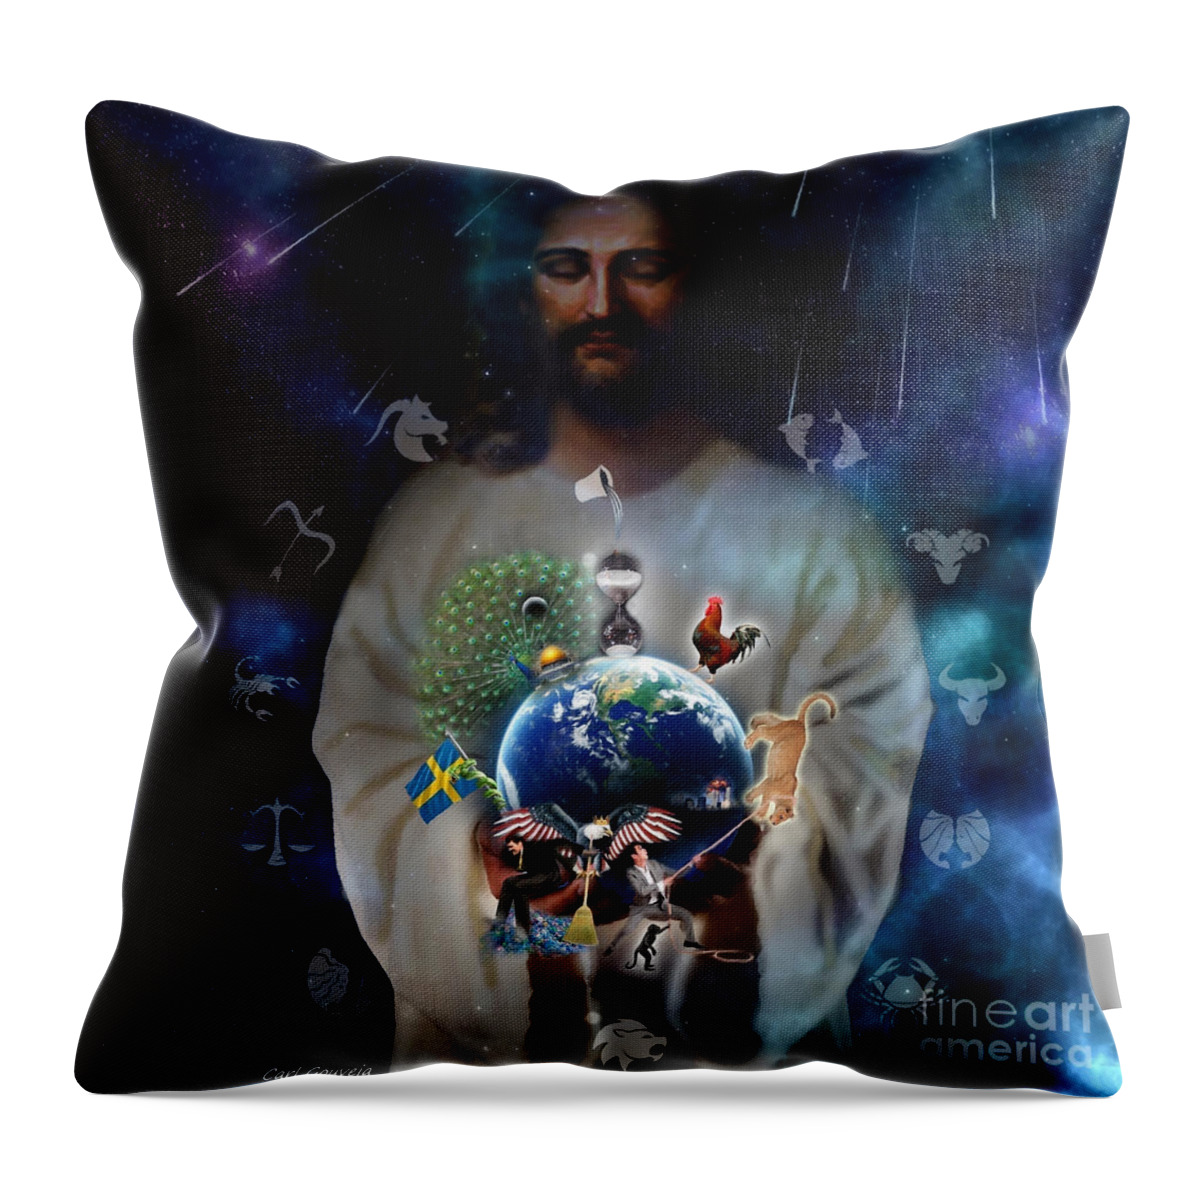 Nostradamus Time Wheel Throw Pillow featuring the digital art Nostradamus time wheel by Carl Gouveia